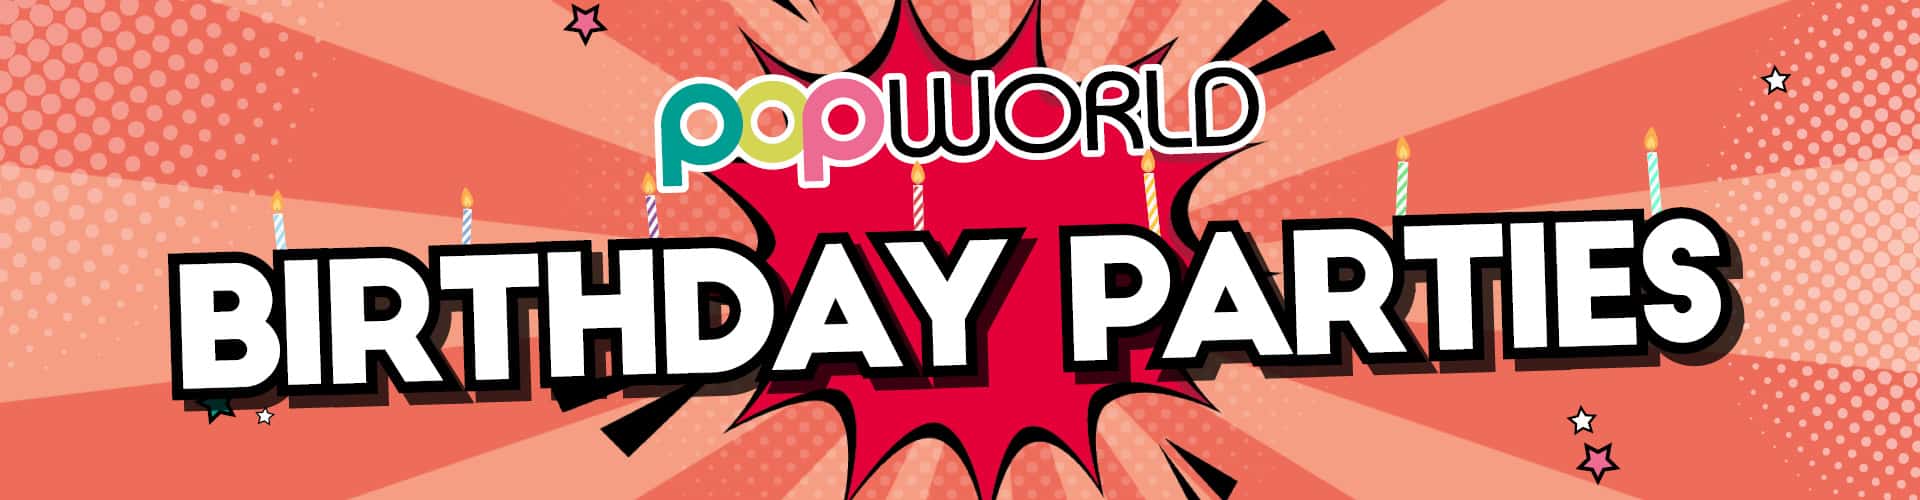 Celebrate your Birthday at Popworld Birmingham